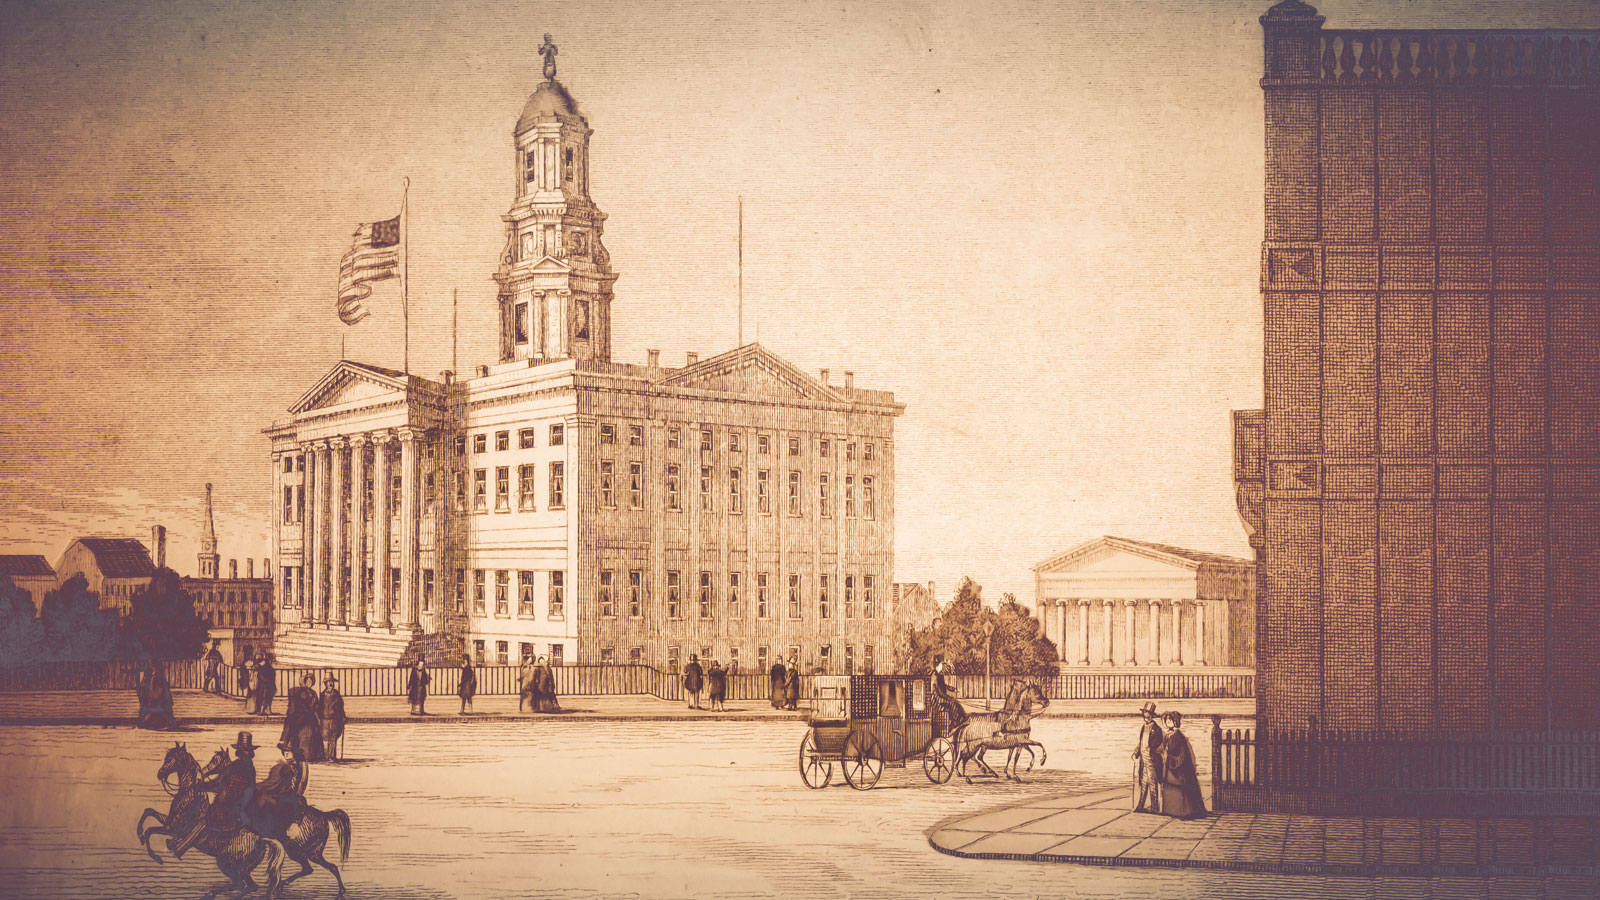 An illustration of Brooklyn City Hall